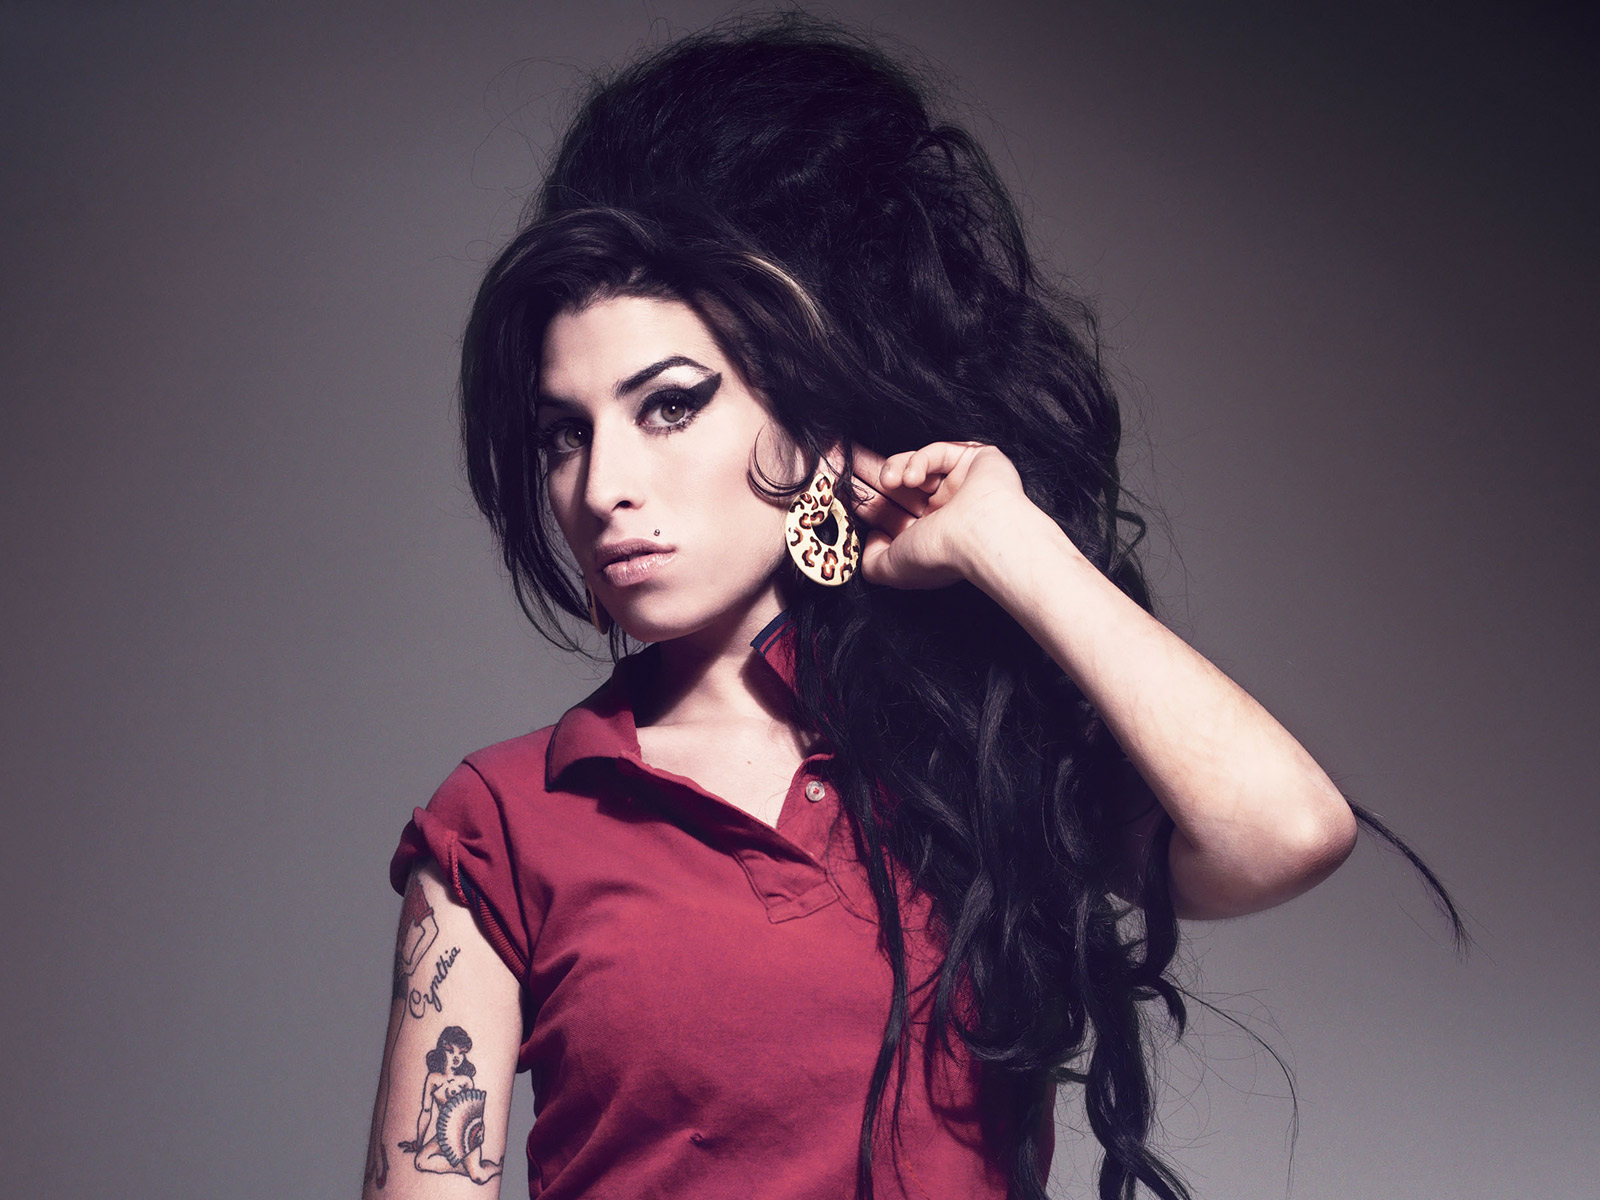 « Back to black » – Amy Winehouse / 2006